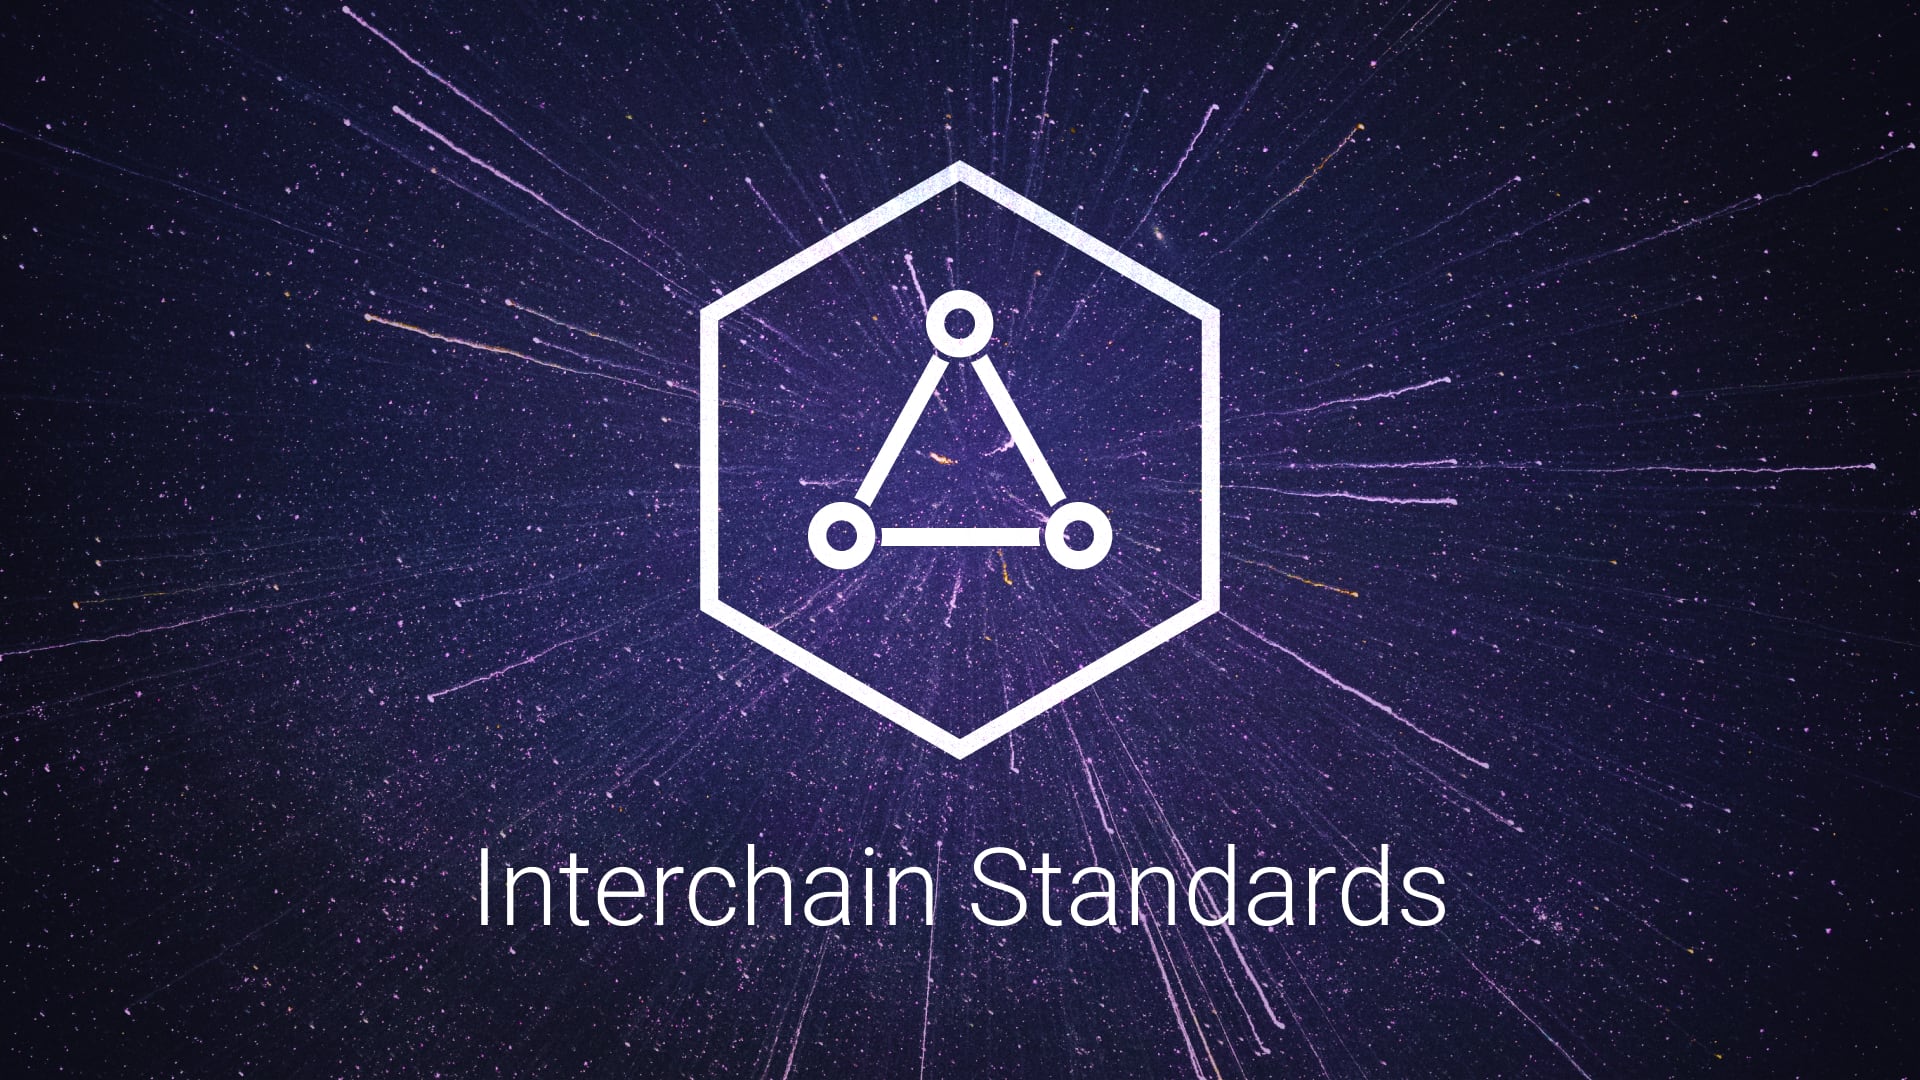 interchain-standards-image.jpg